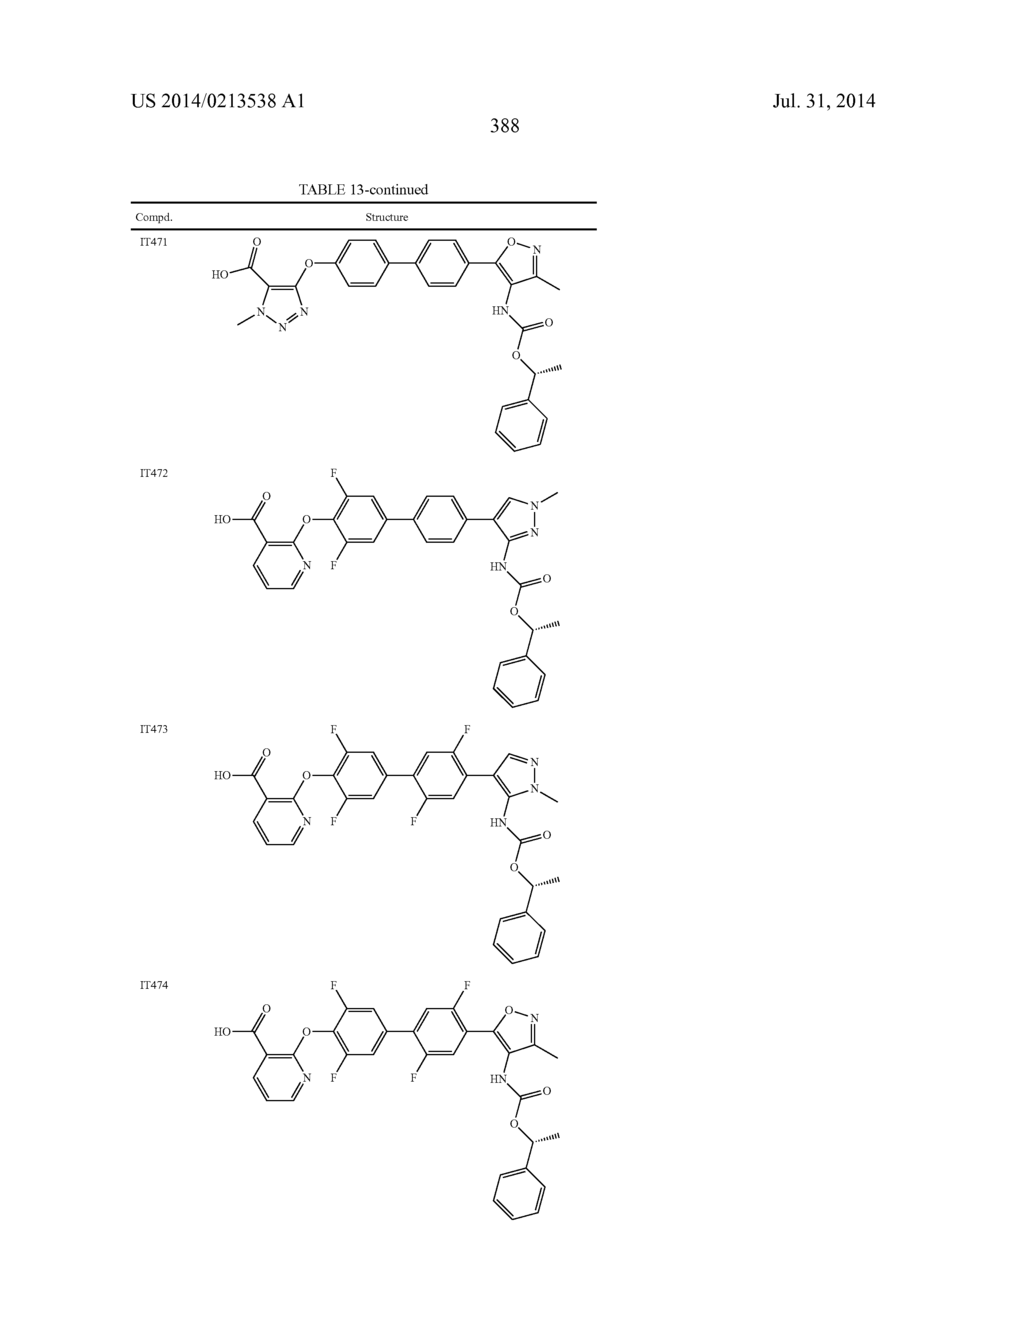 LYSOPHOSPHATIDIC ACID RECEPTOR ANTAGONISTS - diagram, schematic, and image 389